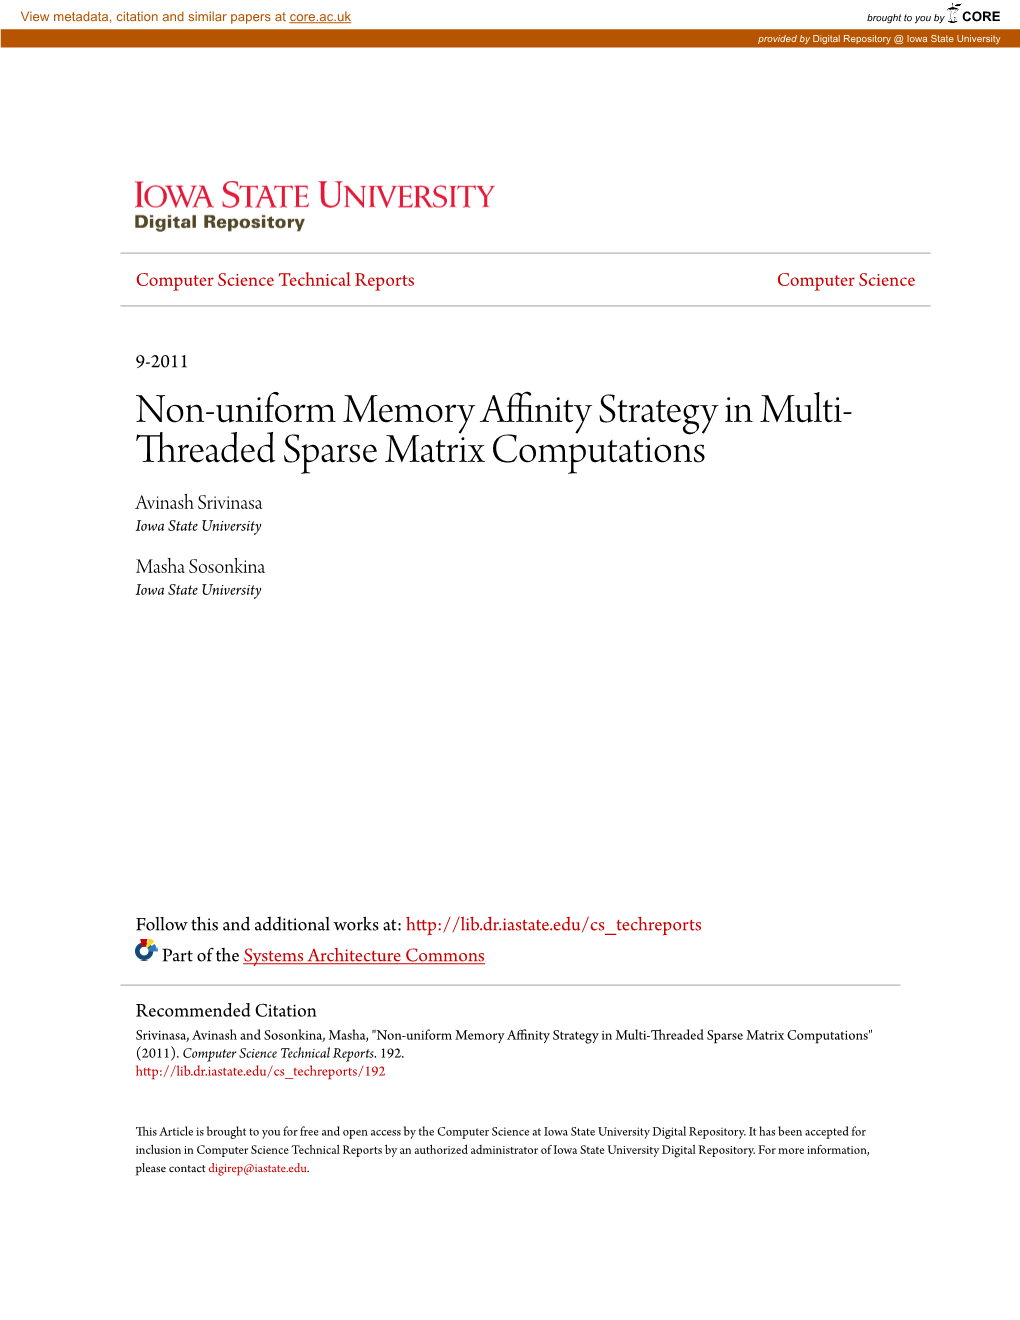 Non-Uniform Memory Affinity Strategy in Multi-Threaded Sparse Matrix Computations" (2011)